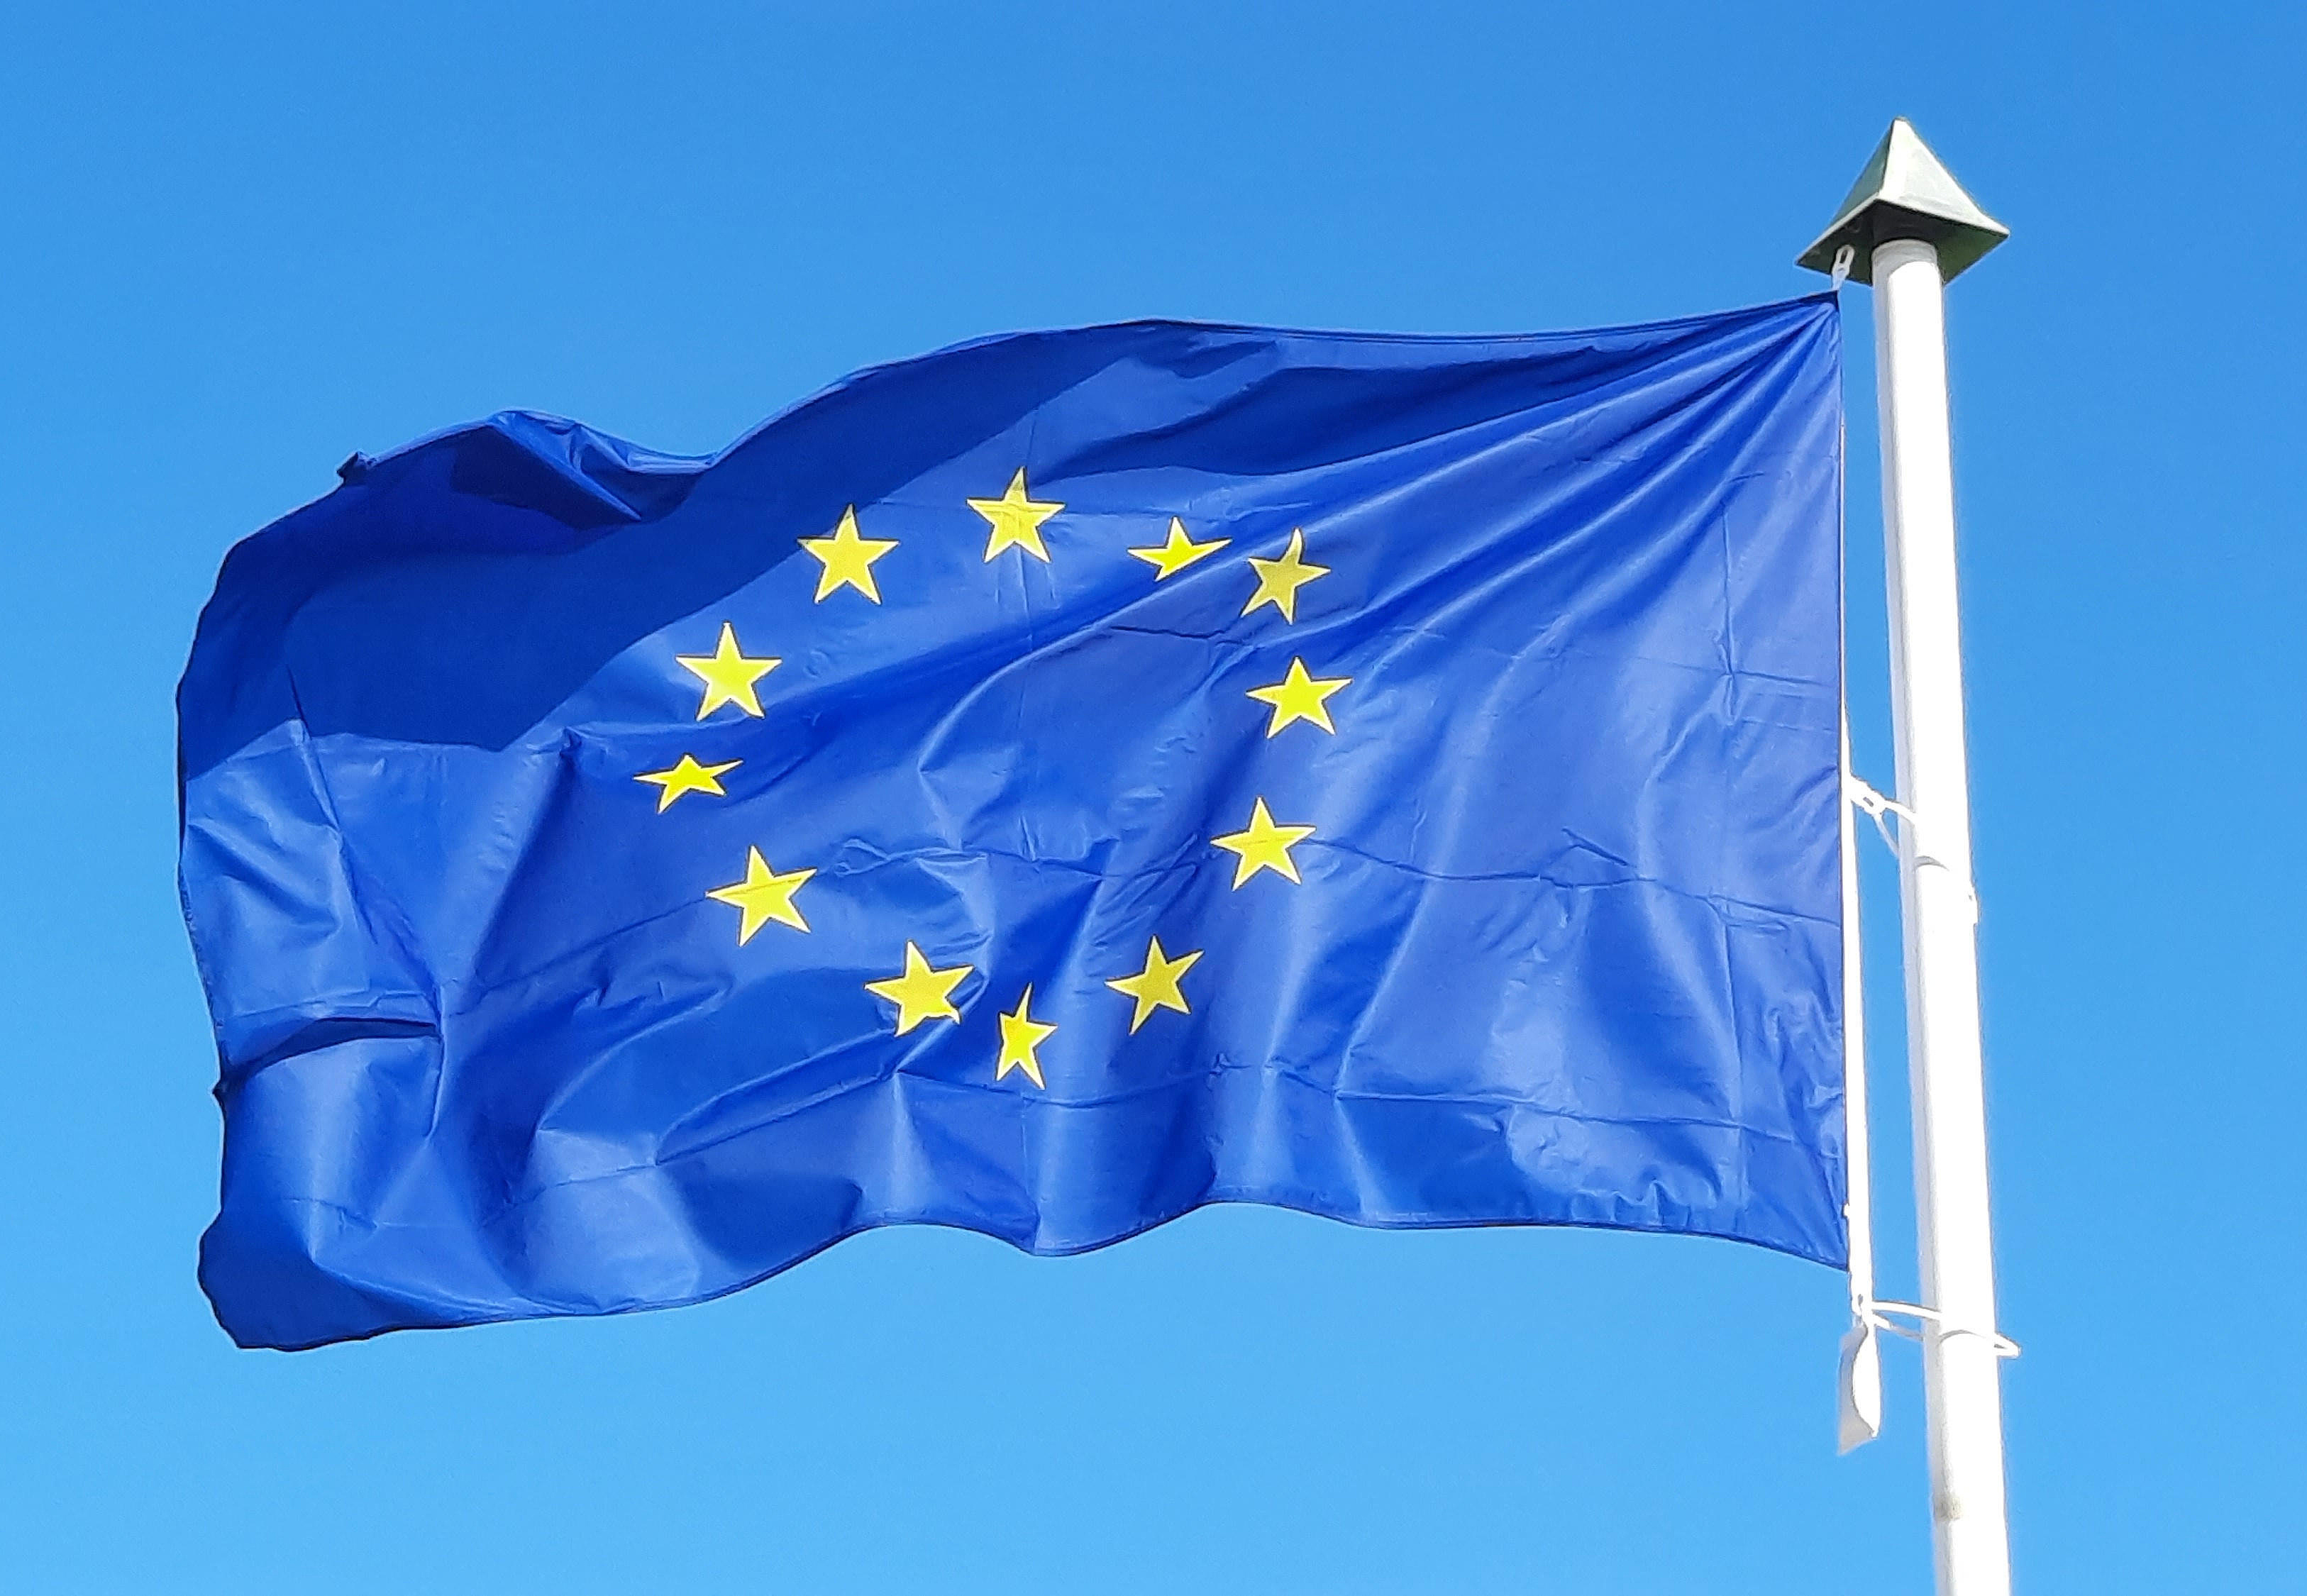 blaue Flagge mit Sternen kreisförmig angeordnet, Europaflagge